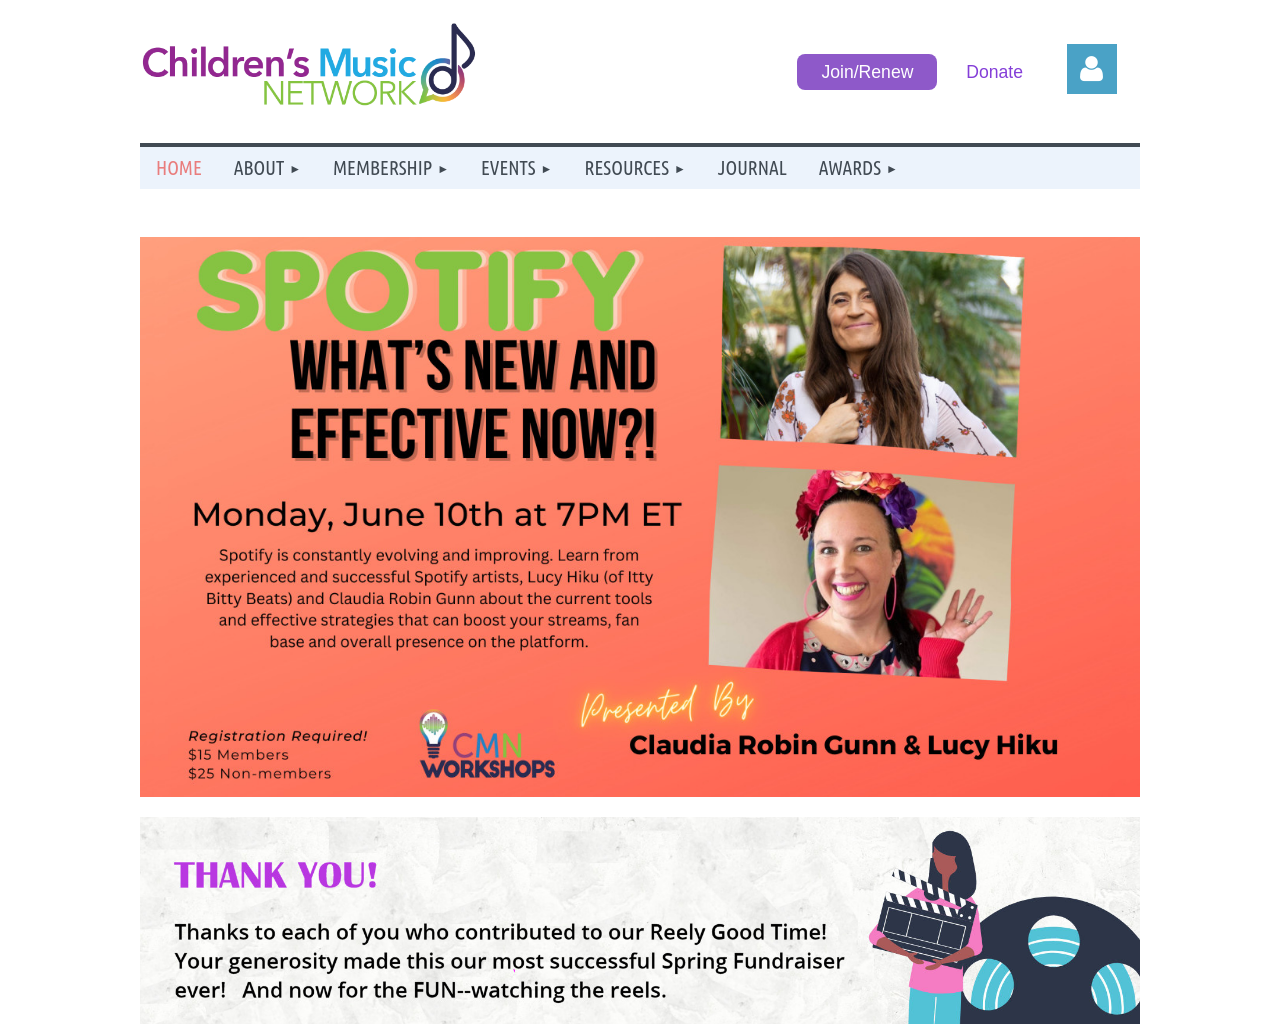 childrensmusic.org